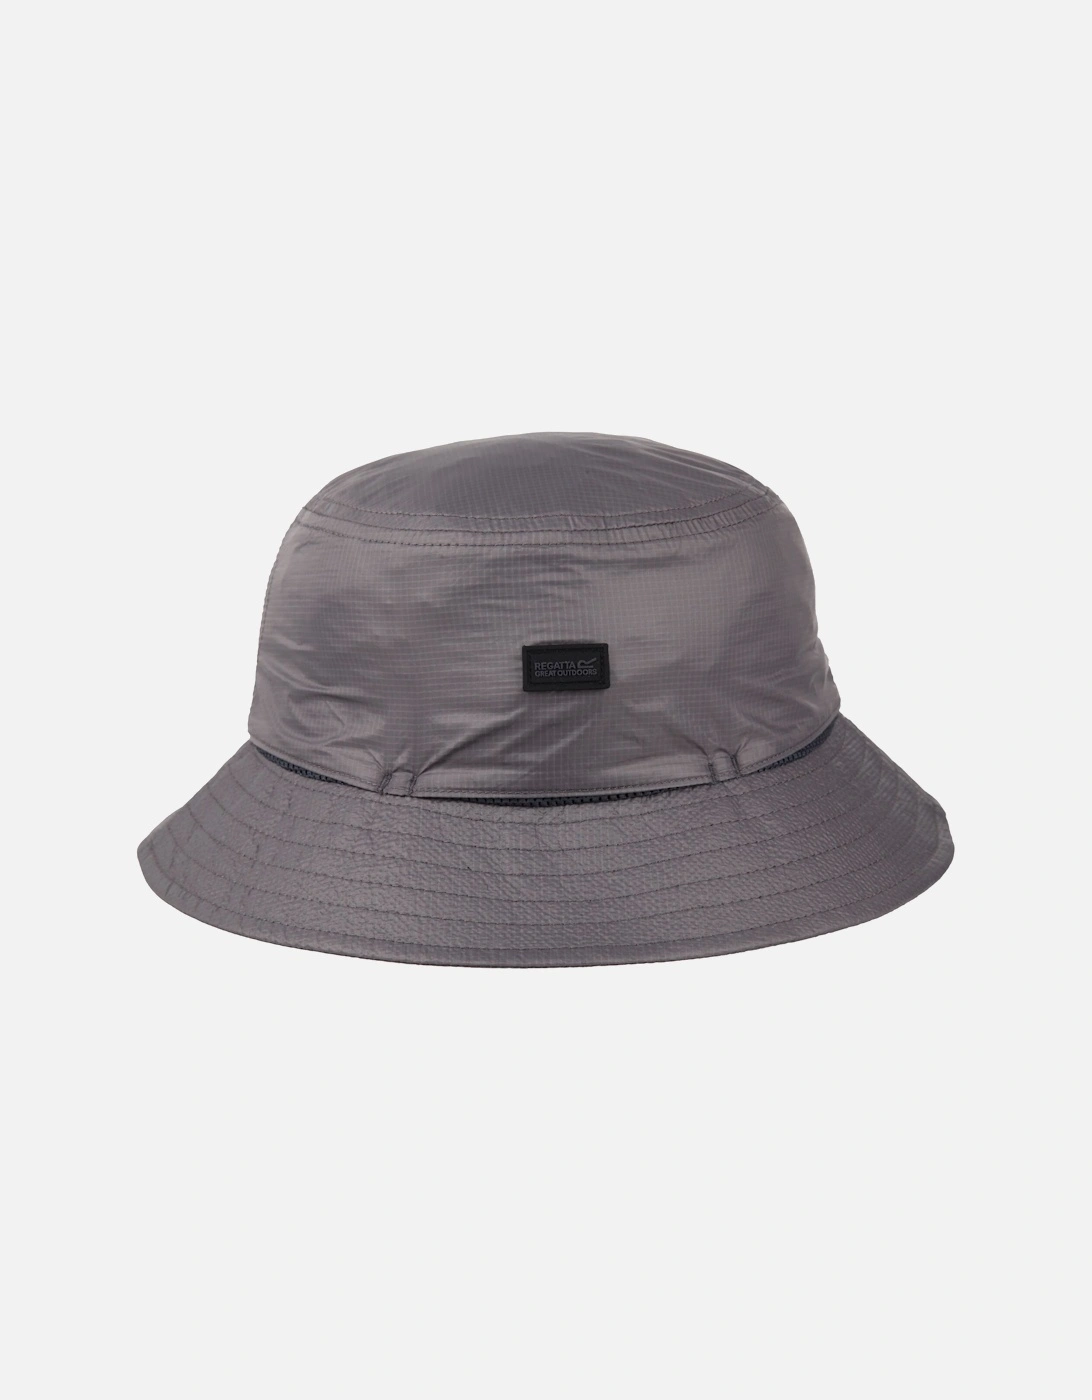 Unisex Adult Utility Bucket Hat